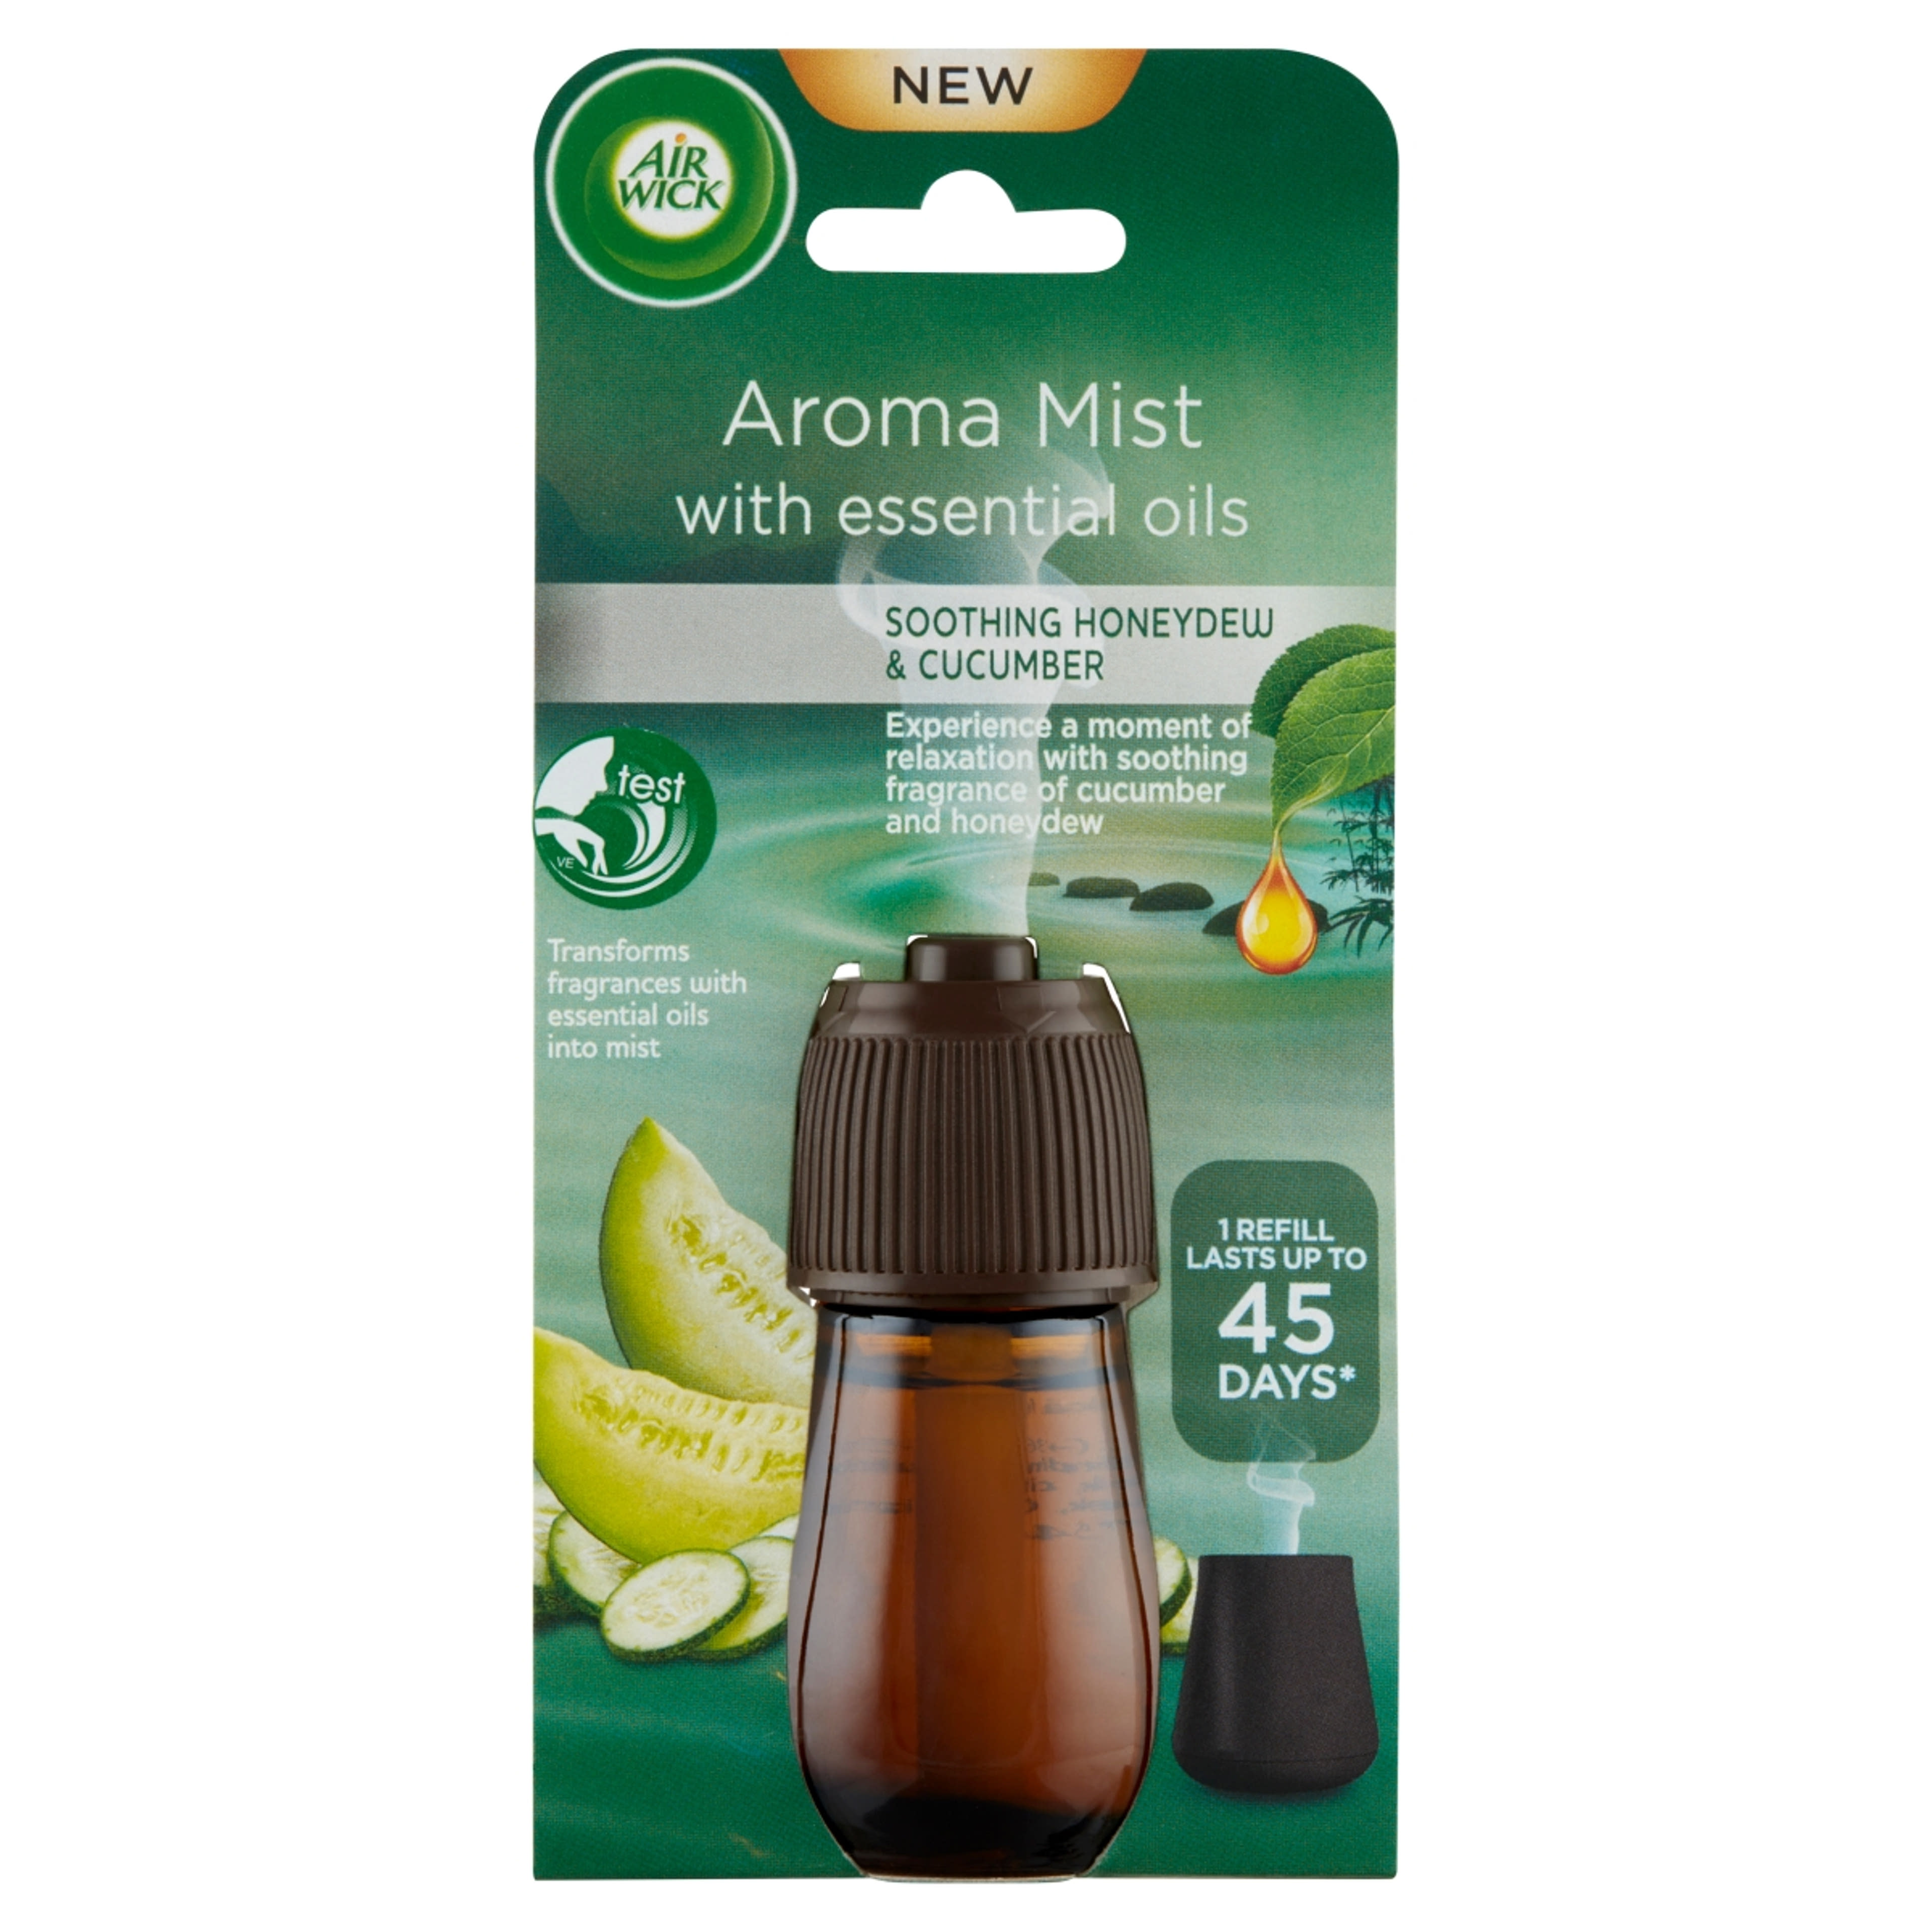 Air Wick Aroma Mist Mézdinnye és Uborka aroma diffúzor utántöltő - 20 ml